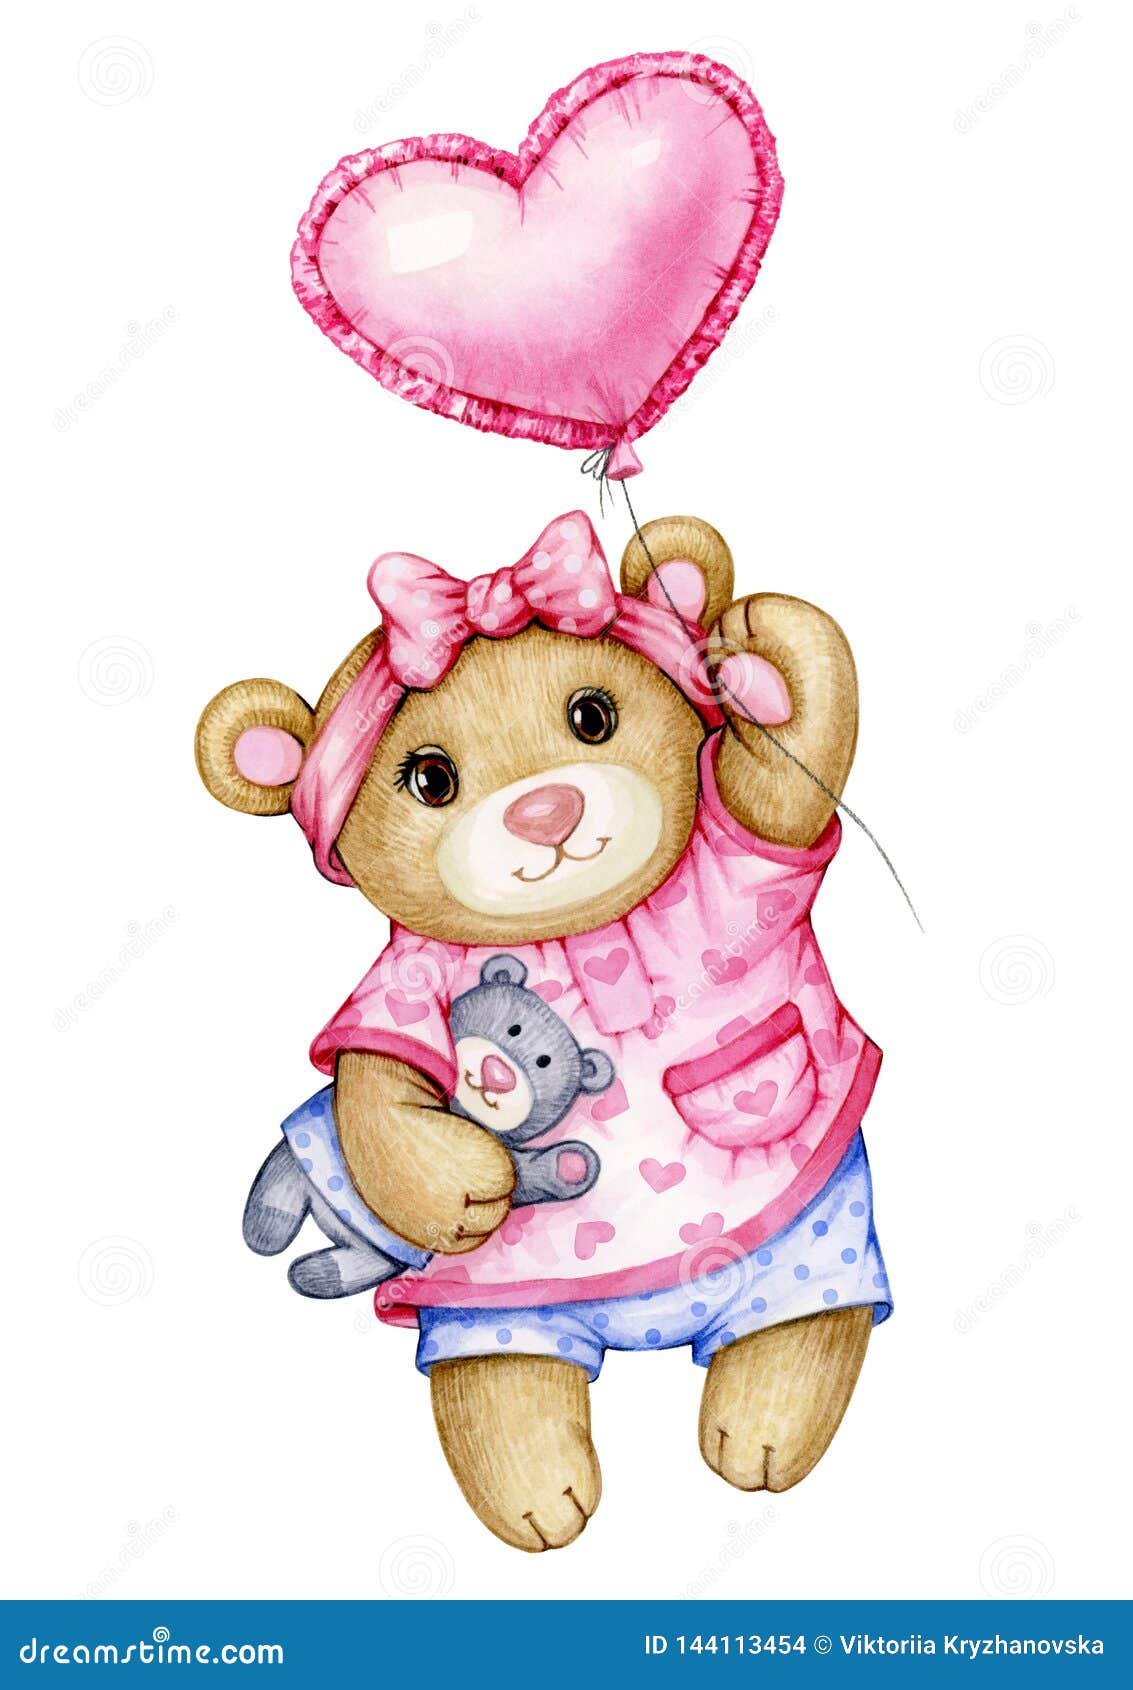 332 Cute Cartoon Girl Teddy Bear Stock Photos - Free & Royalty-Free Stock  Photos from Dreamstime